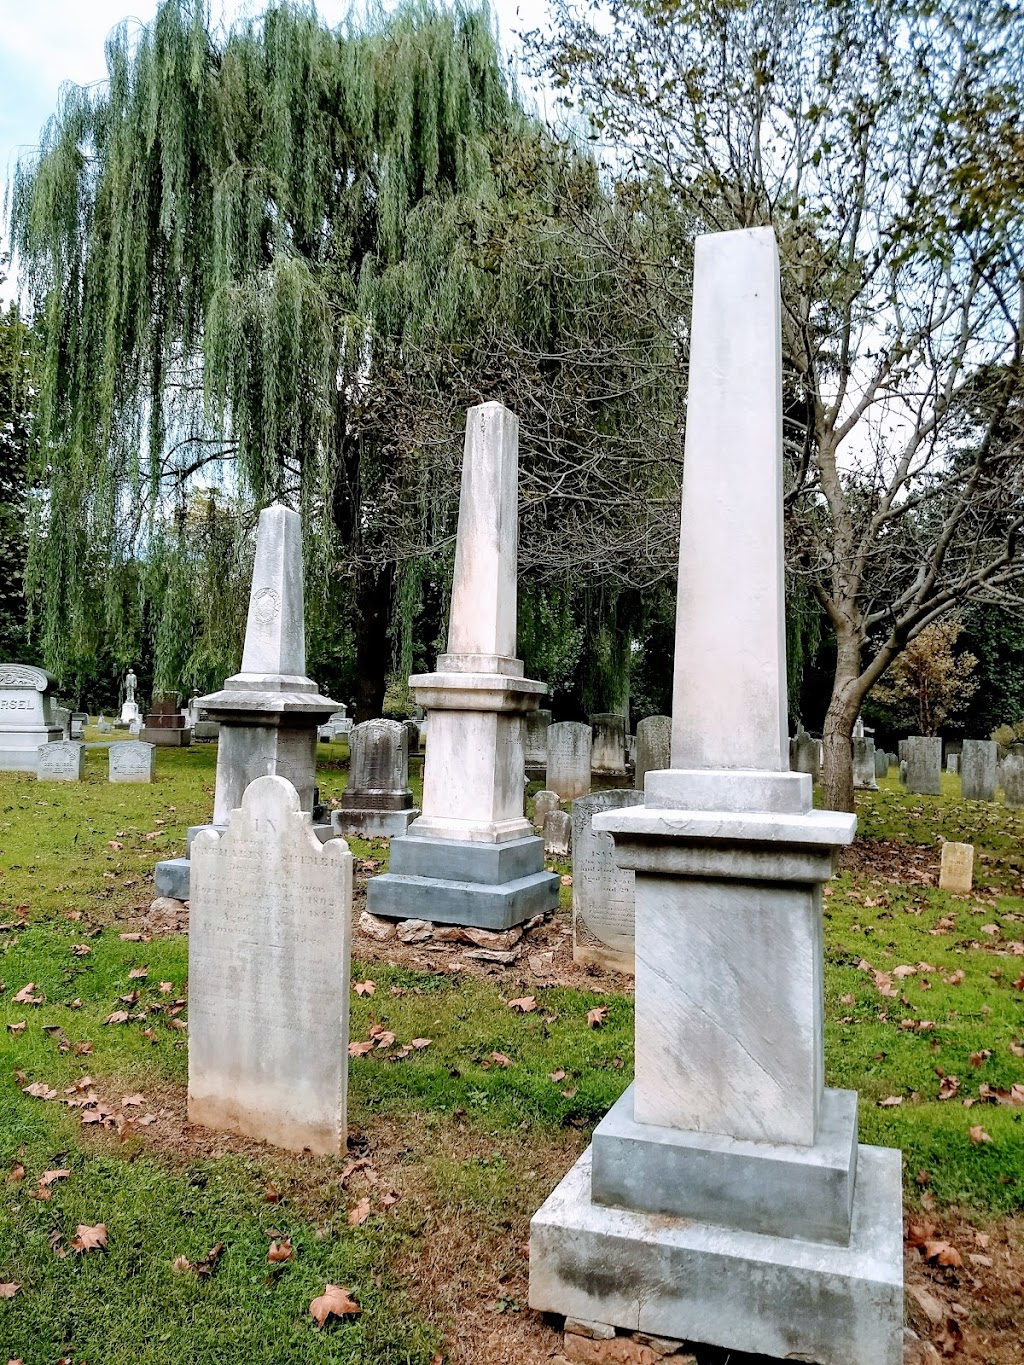 Greenwich Cemetery Association | 15 Greenwich Church Rd, Stewartsville, NJ 08886 | Phone: (908) 479-0144